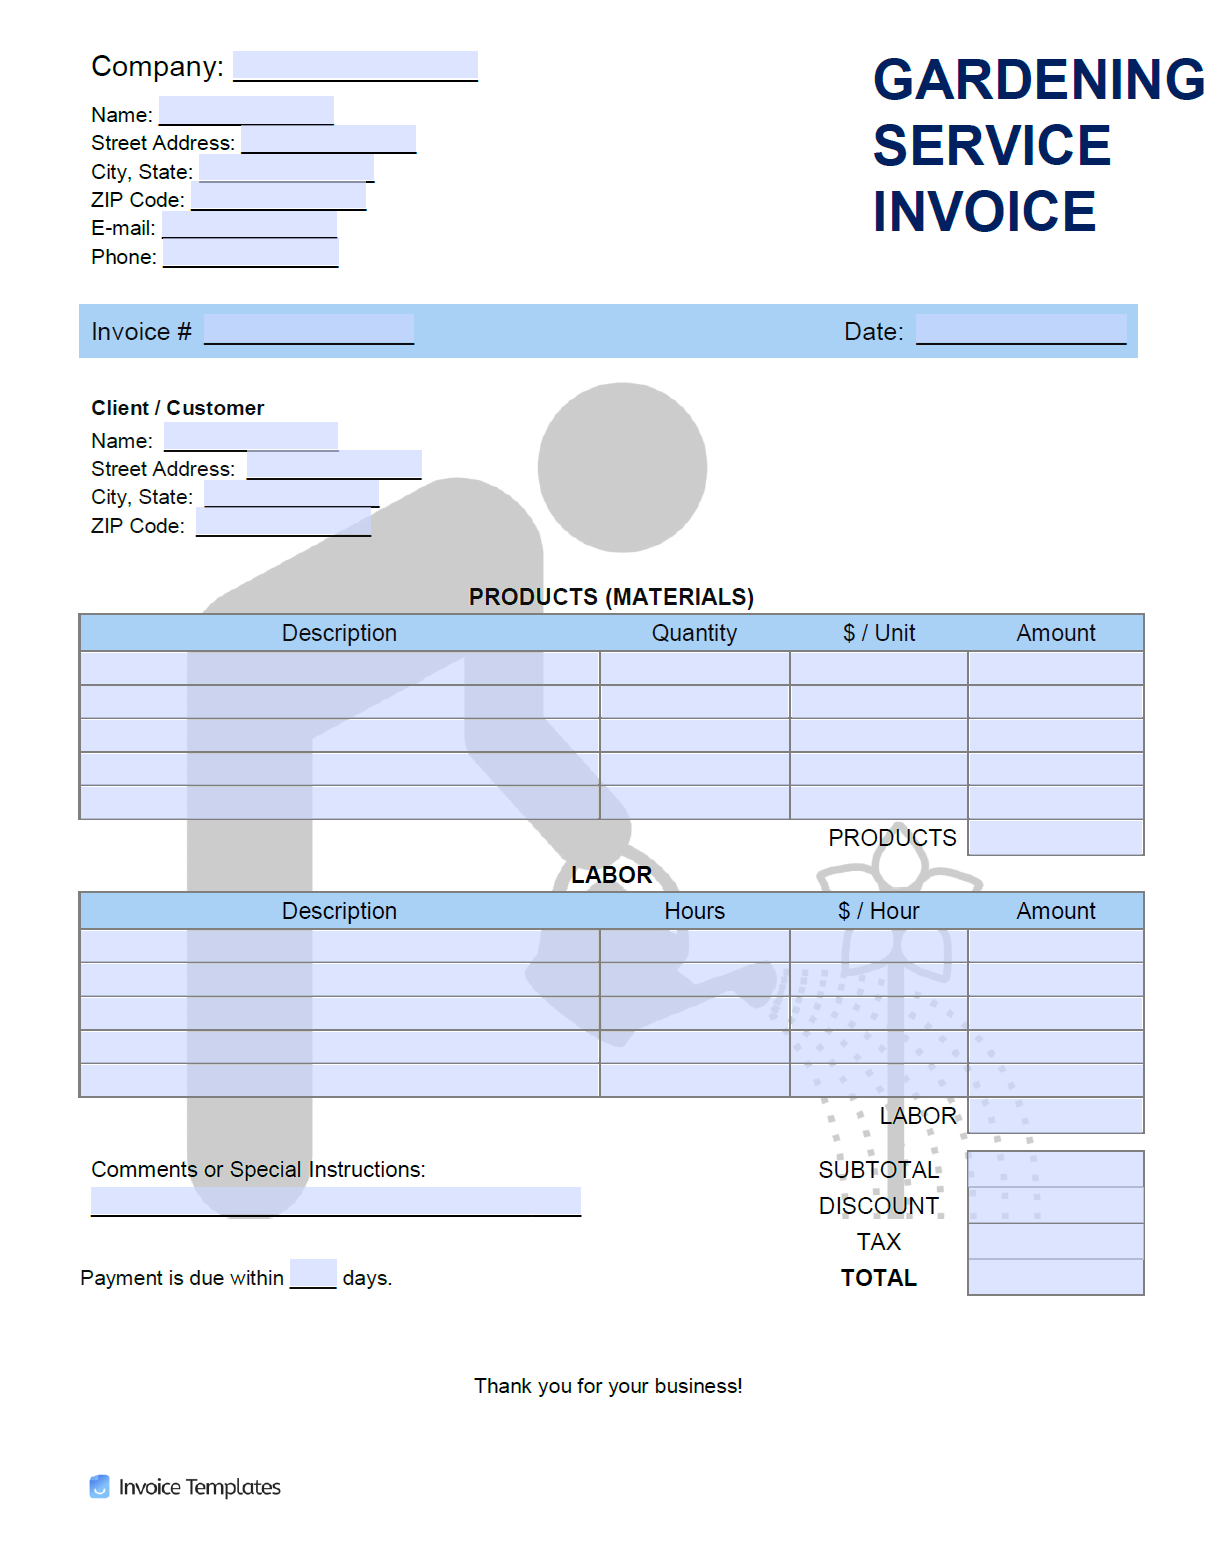 Free Gardening Service Invoice Template  PDF  WORD  EXCEL Intended For Gardening Invoice Template